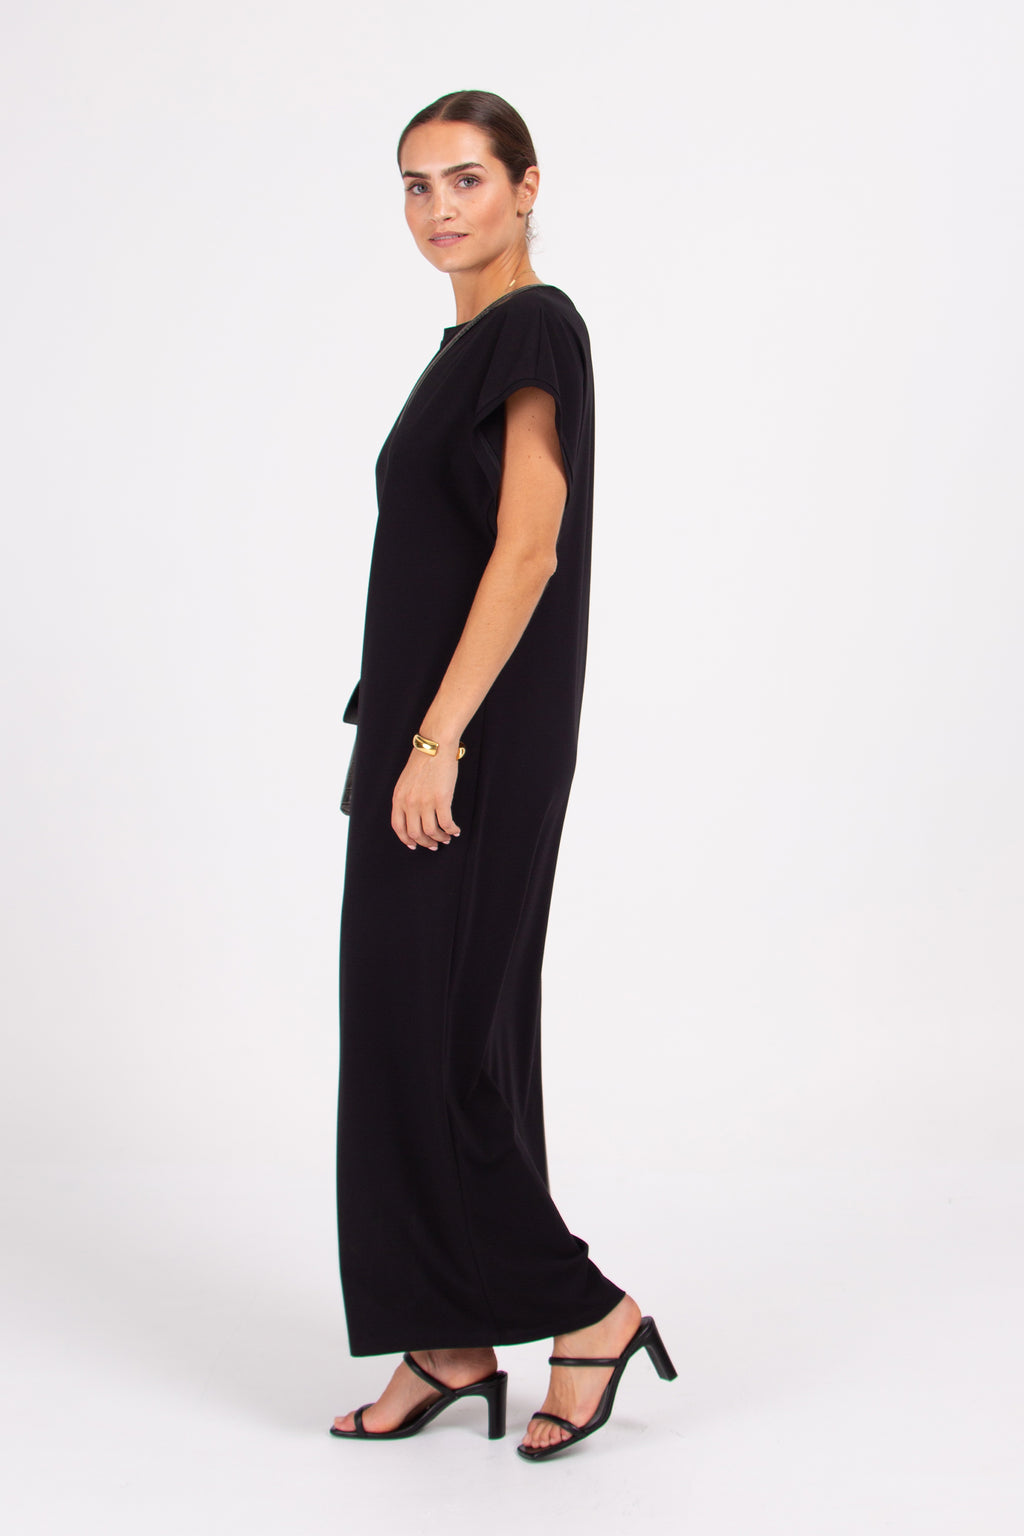 Denise zwarte lange jersey jurk